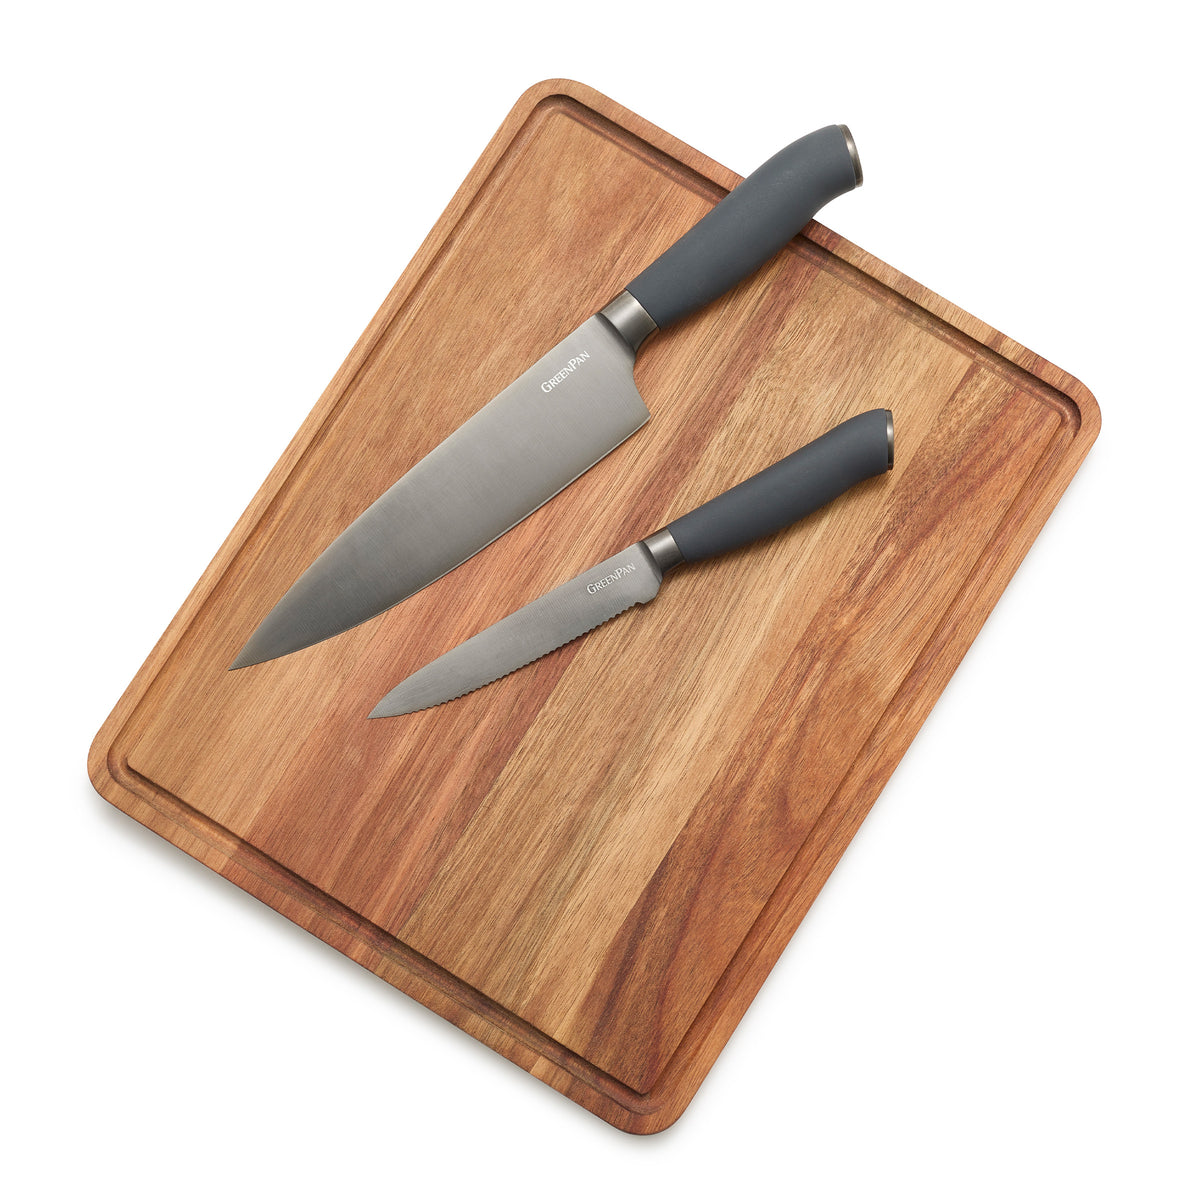 Shop GreenPan Titanium Cutlery 2-Piece Paring Knife Set